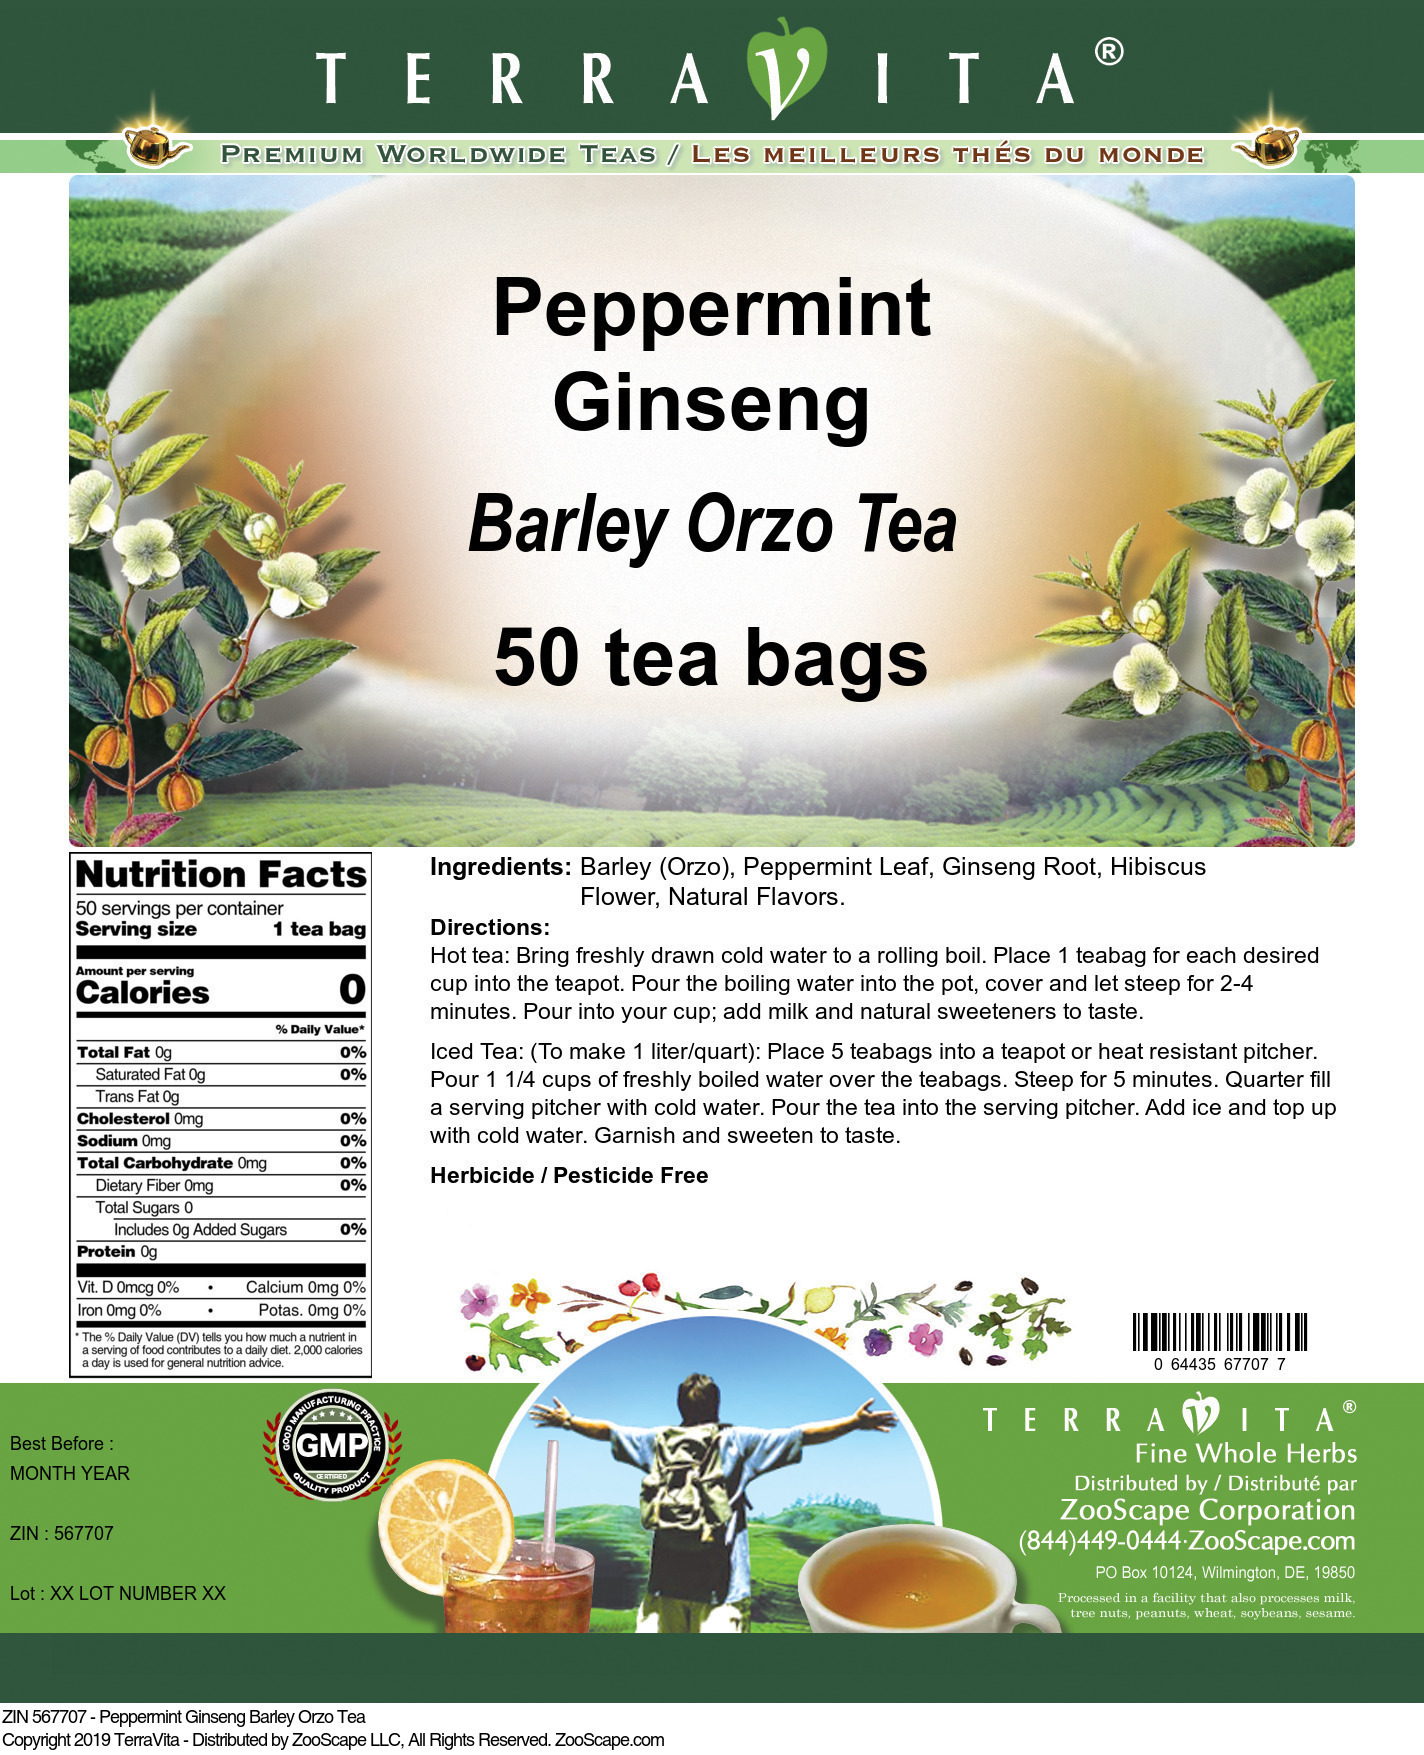 Peppermint Ginseng Barley Orzo Tea - Label